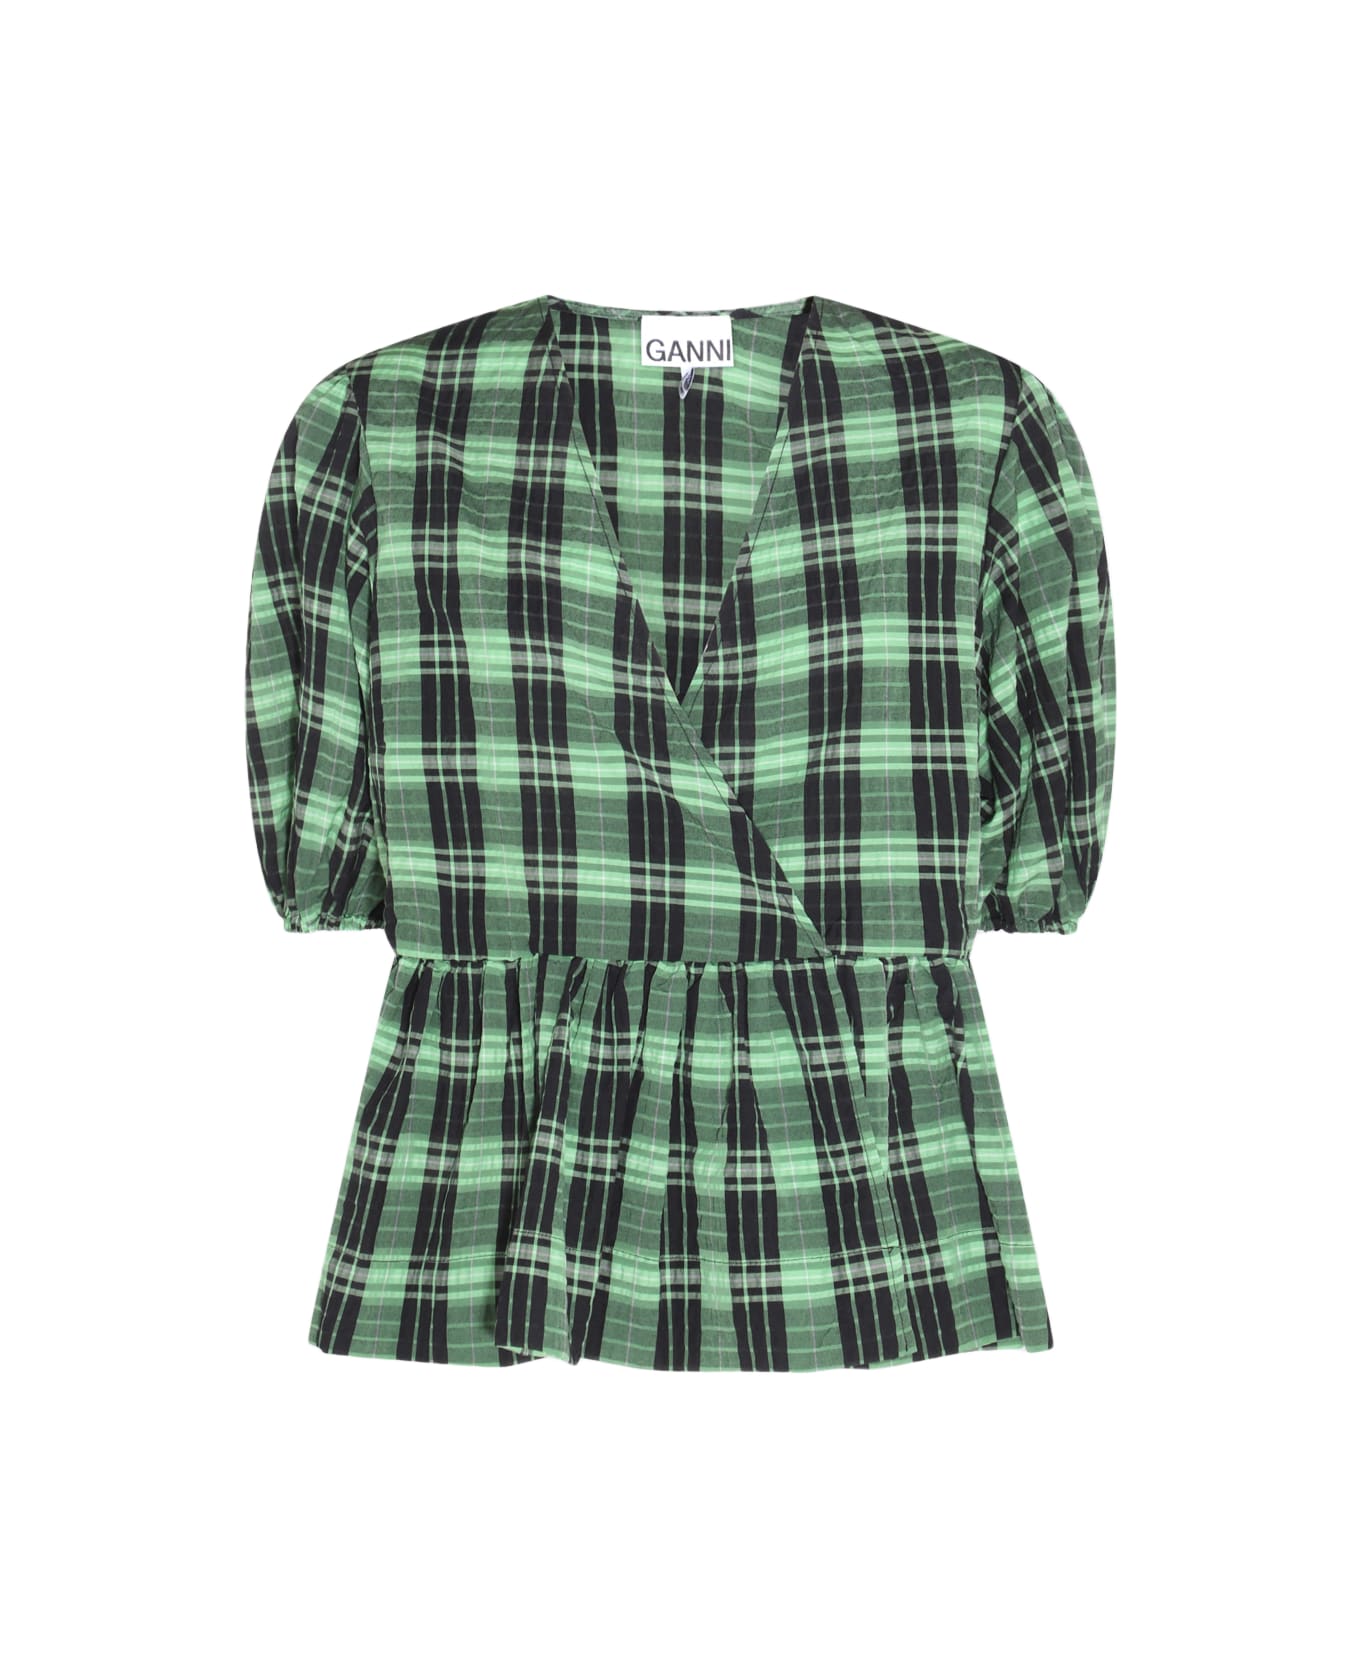 Ganni Green And Black Cotton Blend Shirt - 484